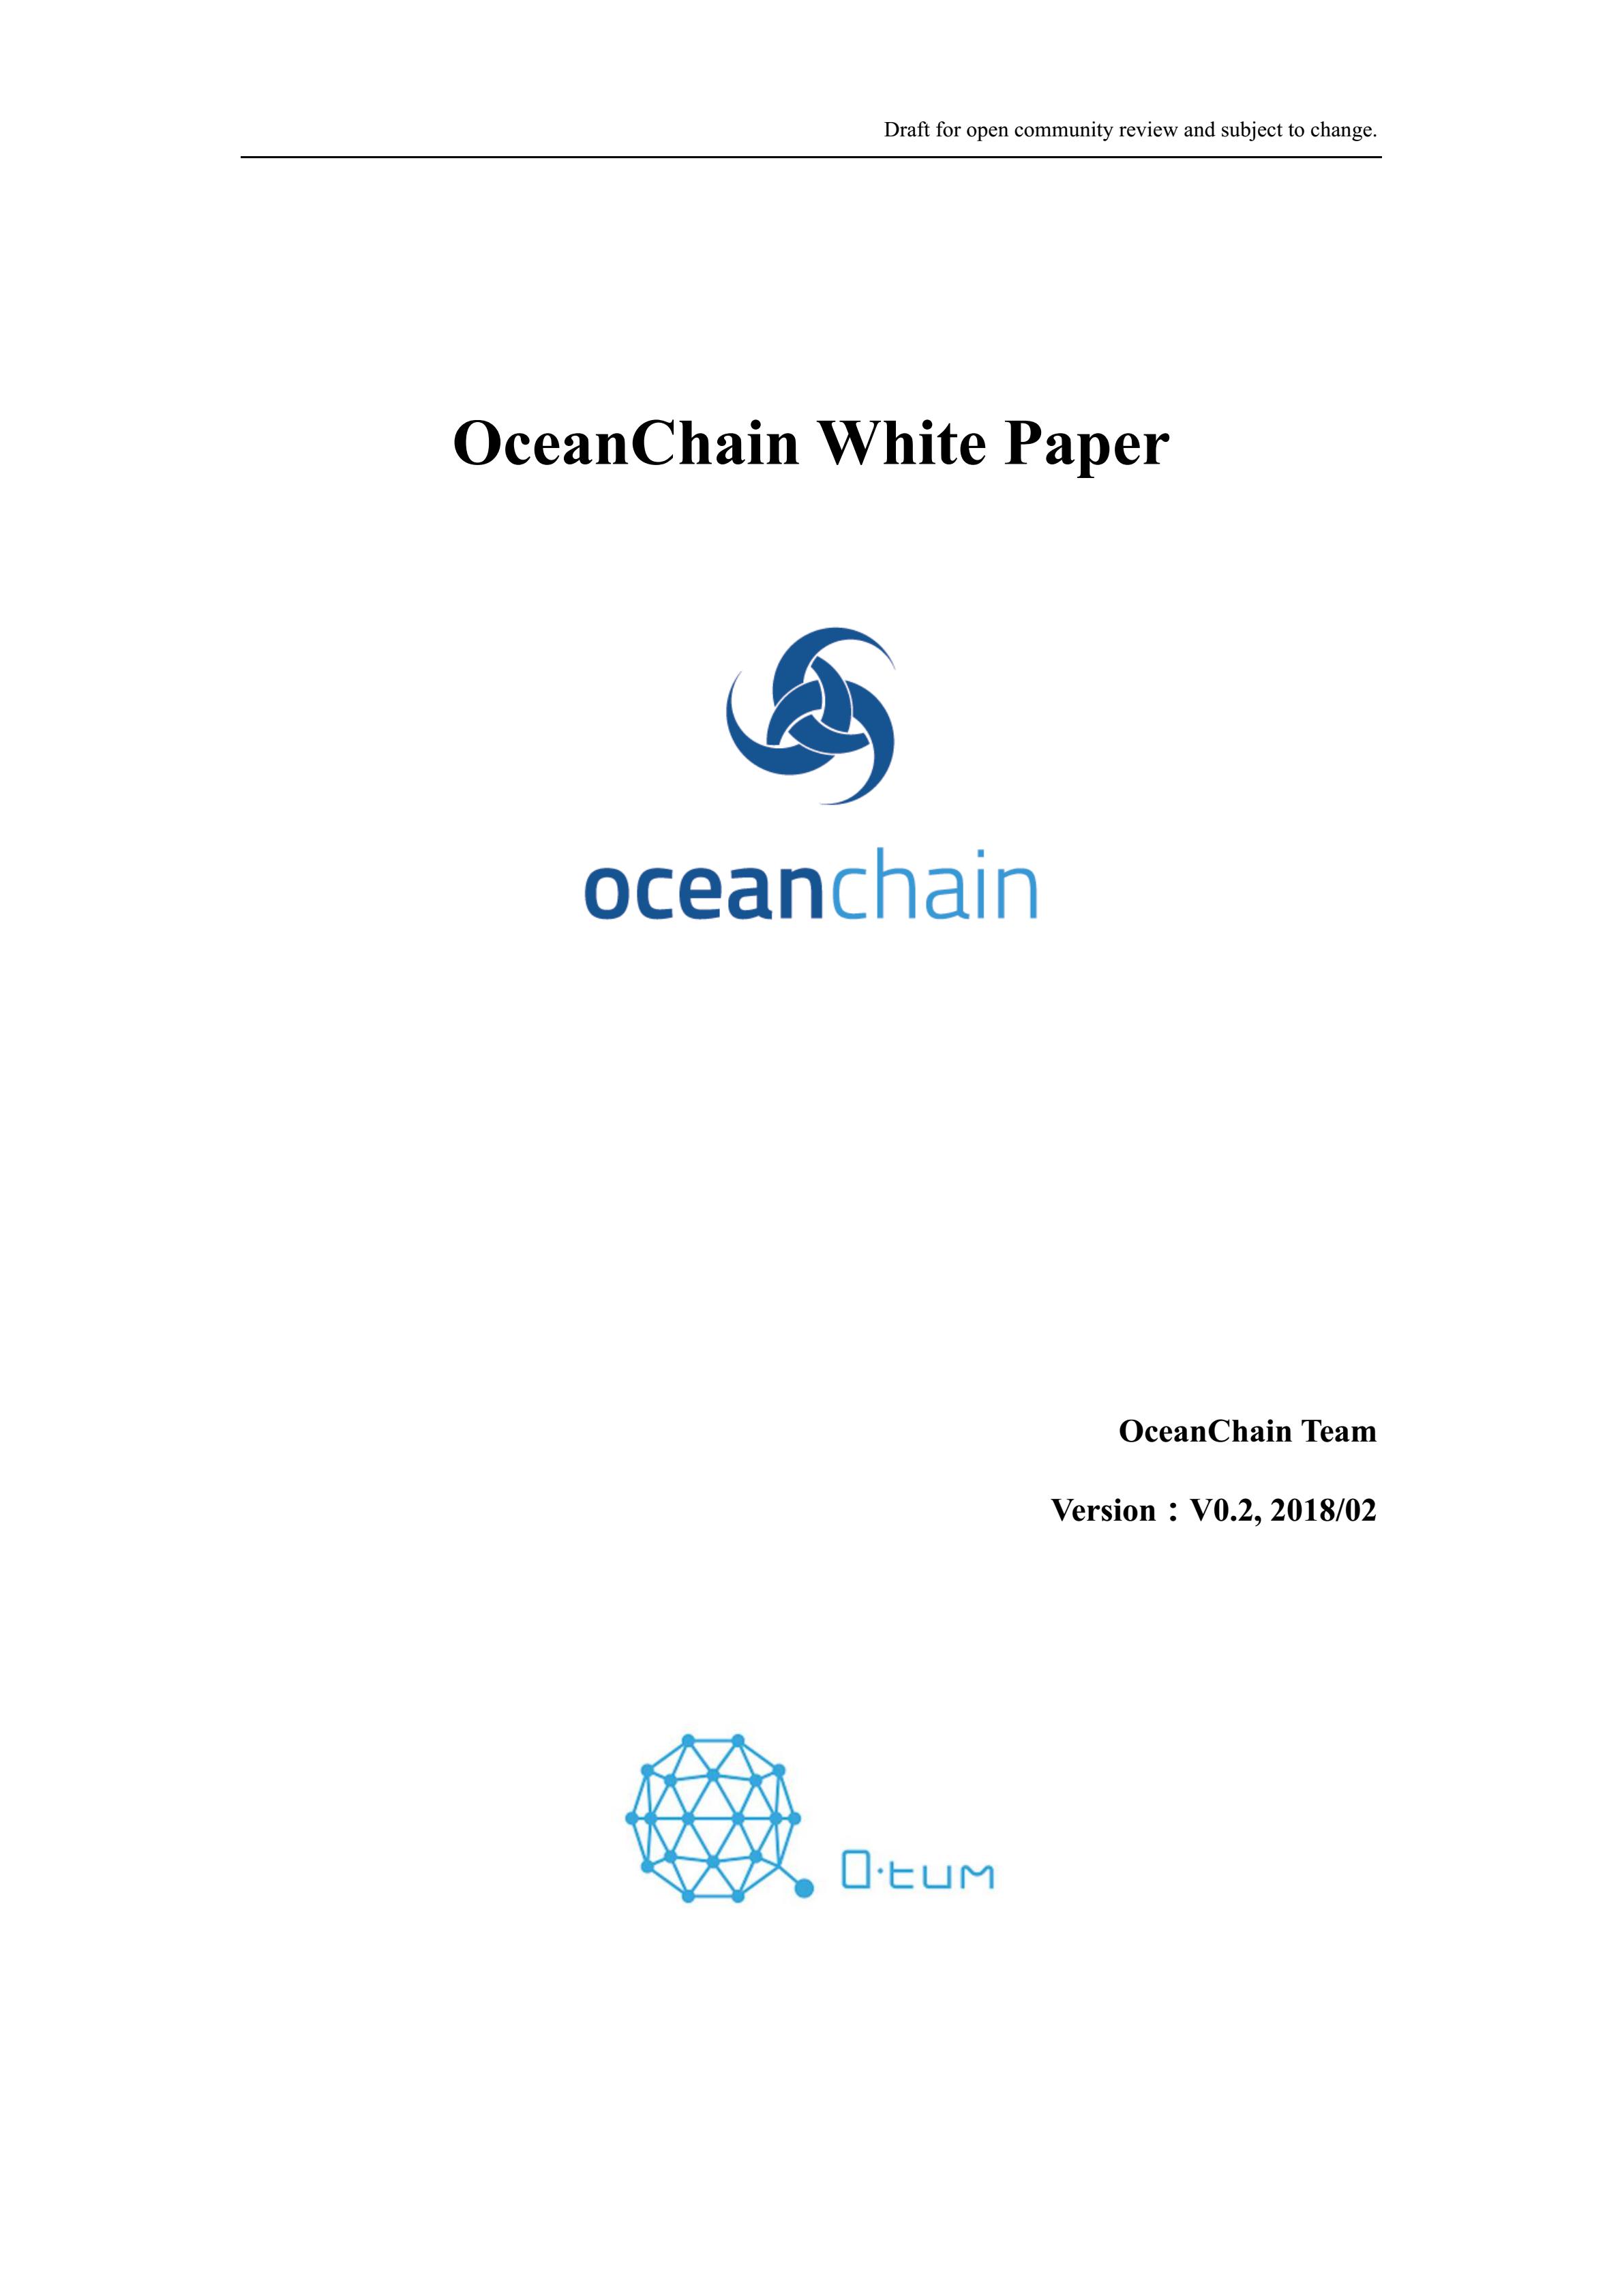 OC_OceanChainEnglish_00.jpg